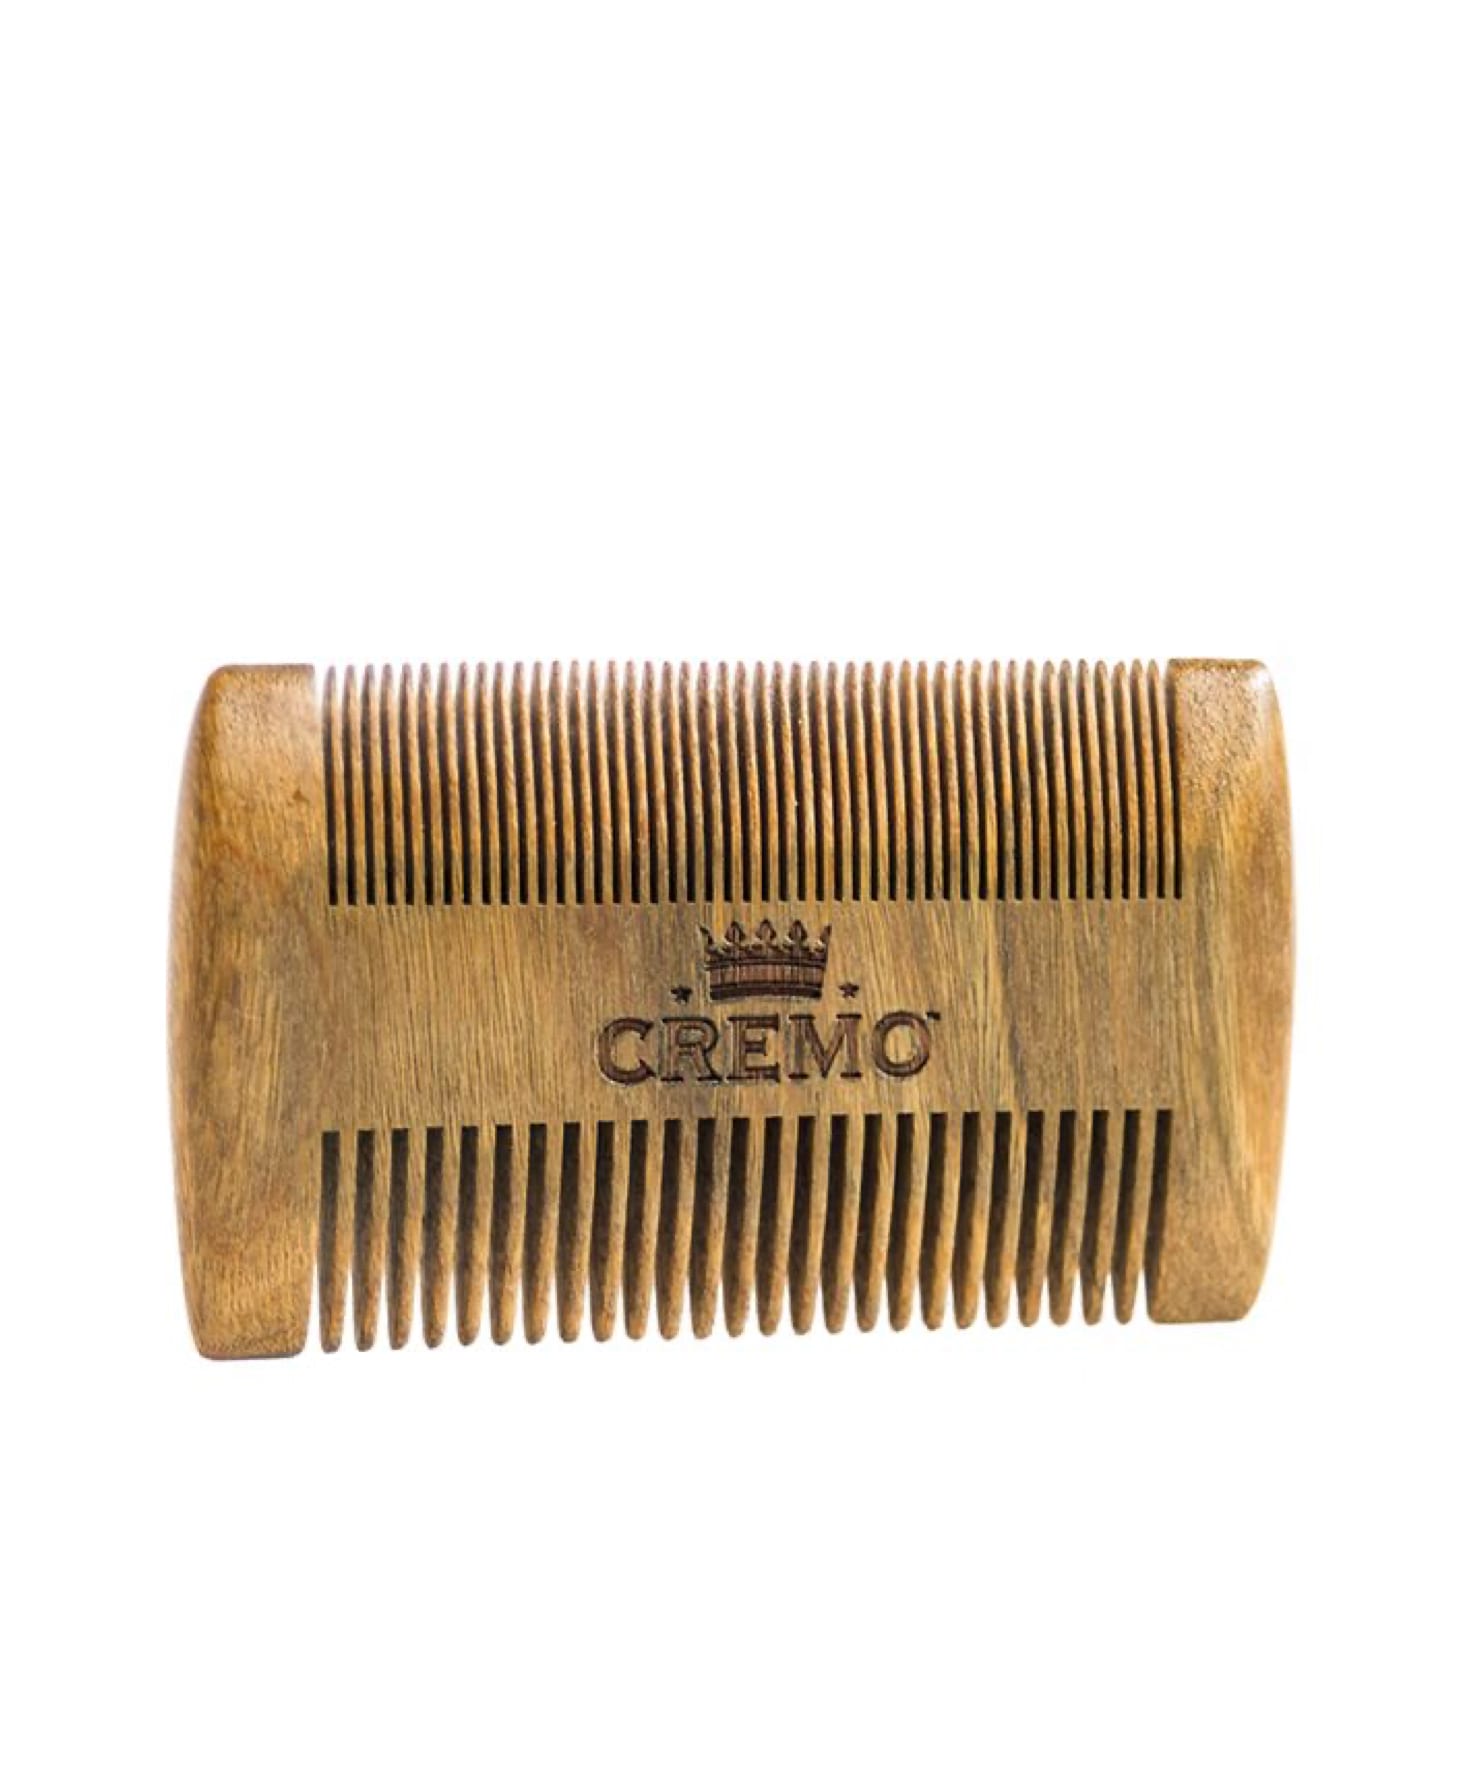 Men's Beard Comb - Quality Wooden Beard Comb | Cremo